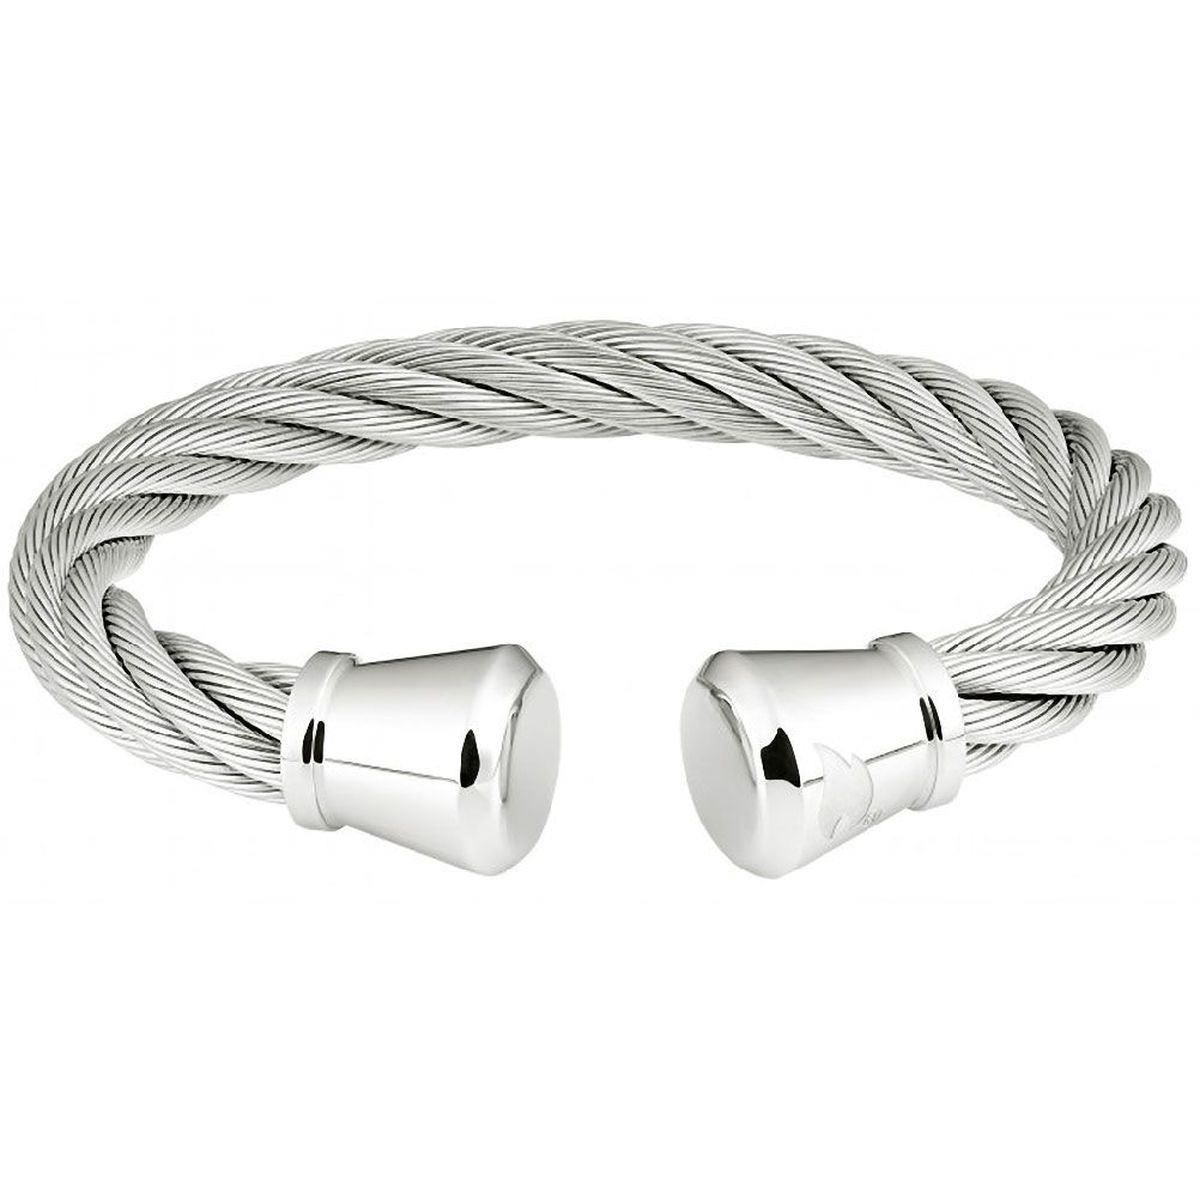 Zippo torque bracelet in twisted stainless steel